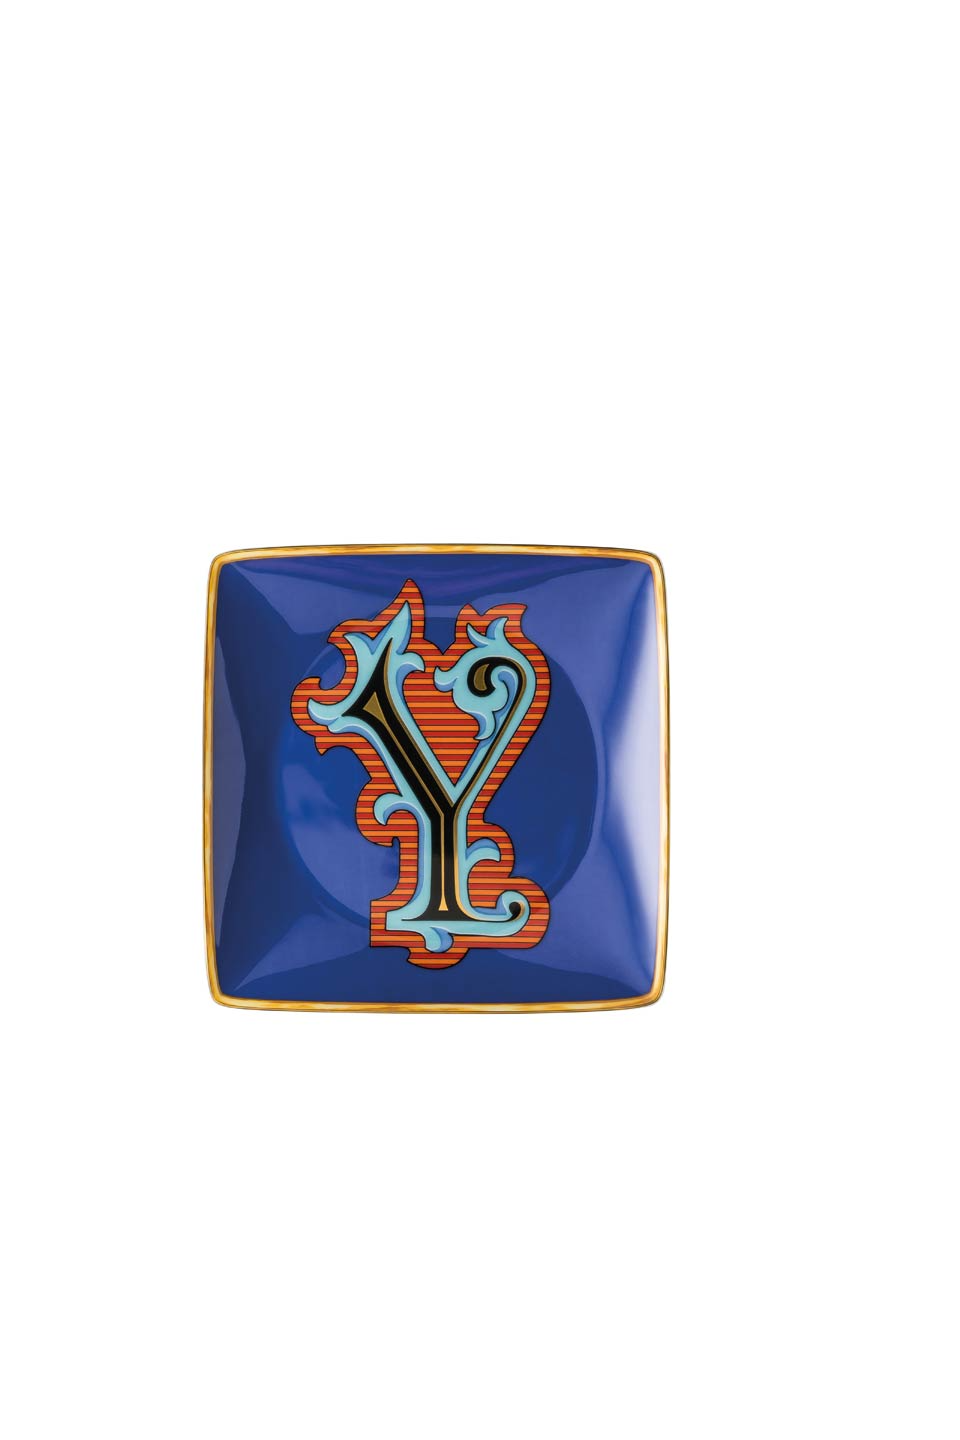 Versace Holiday Alphabet Canape Dish - 4 3/4"